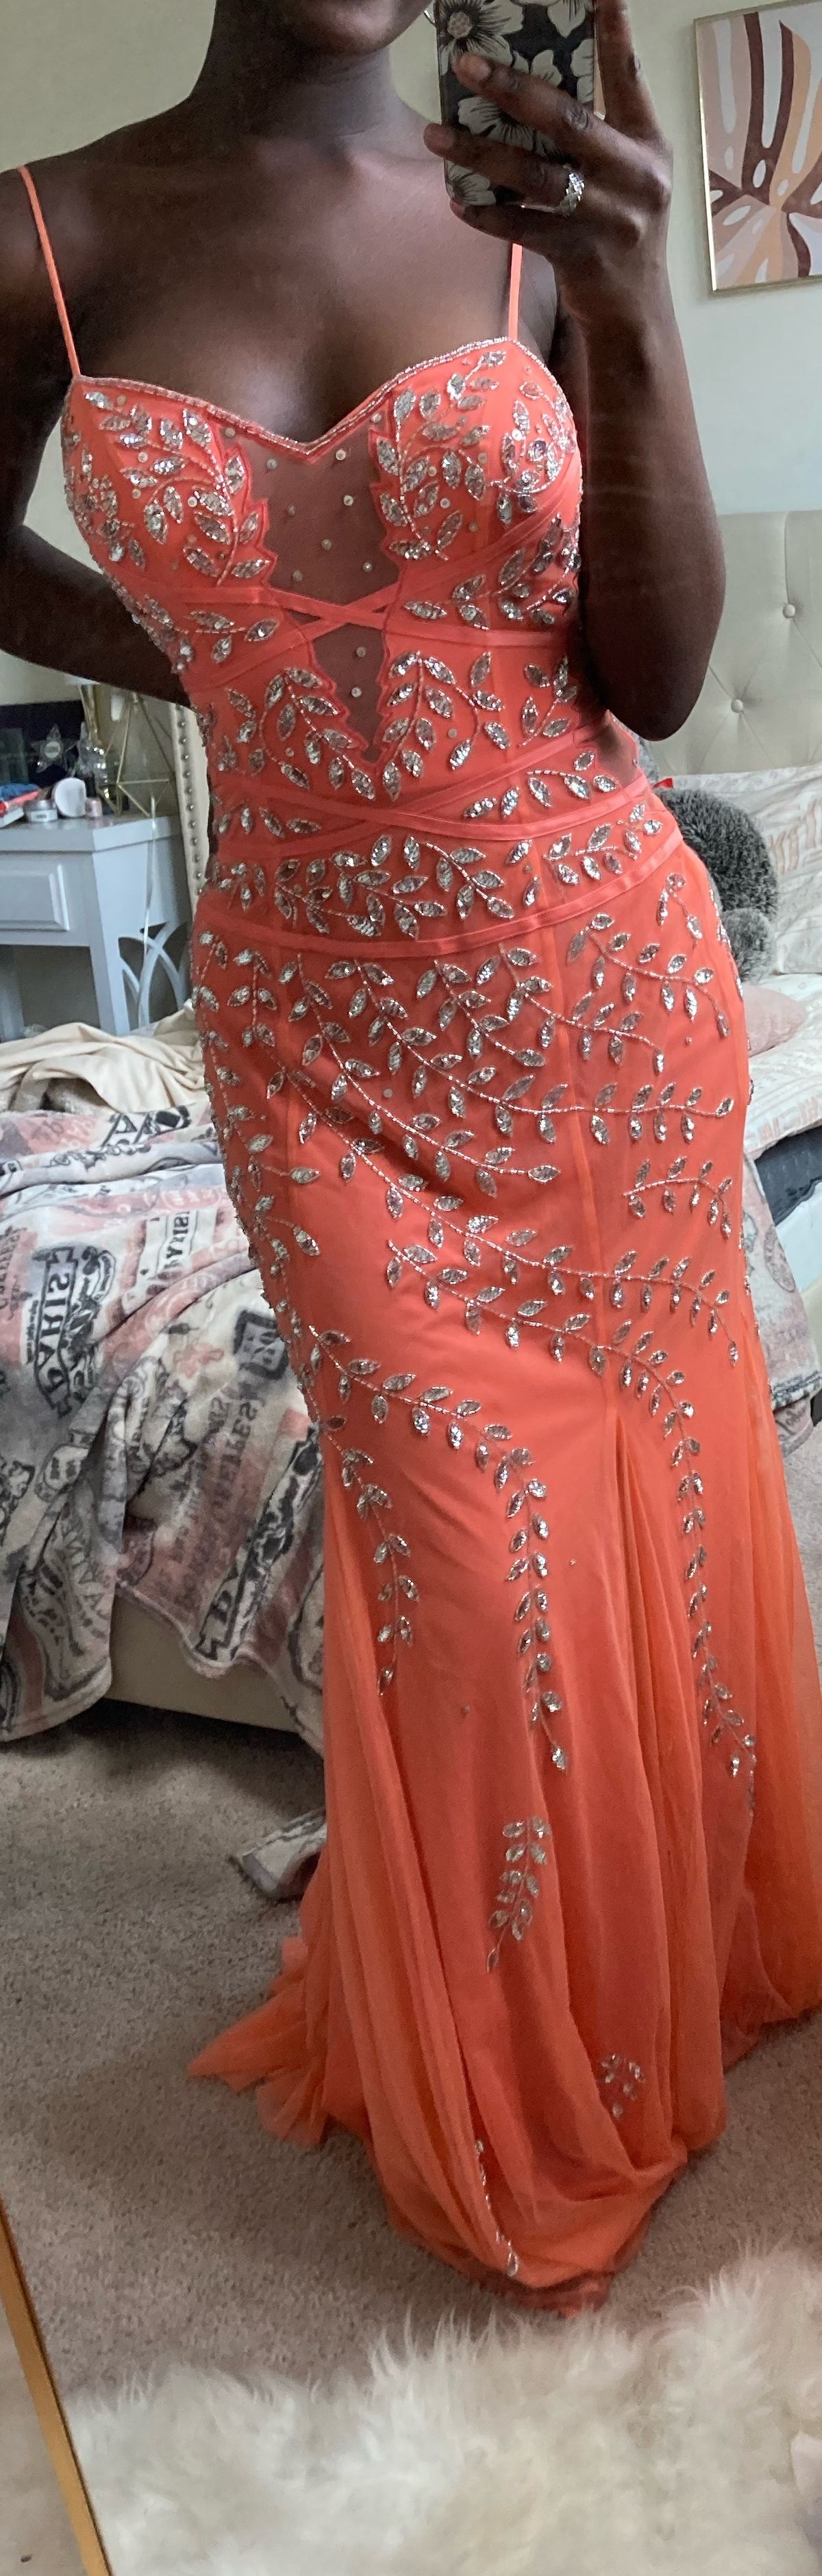 David's Bridal Size 8 Prom Orange Mermaid Dress on Queenly